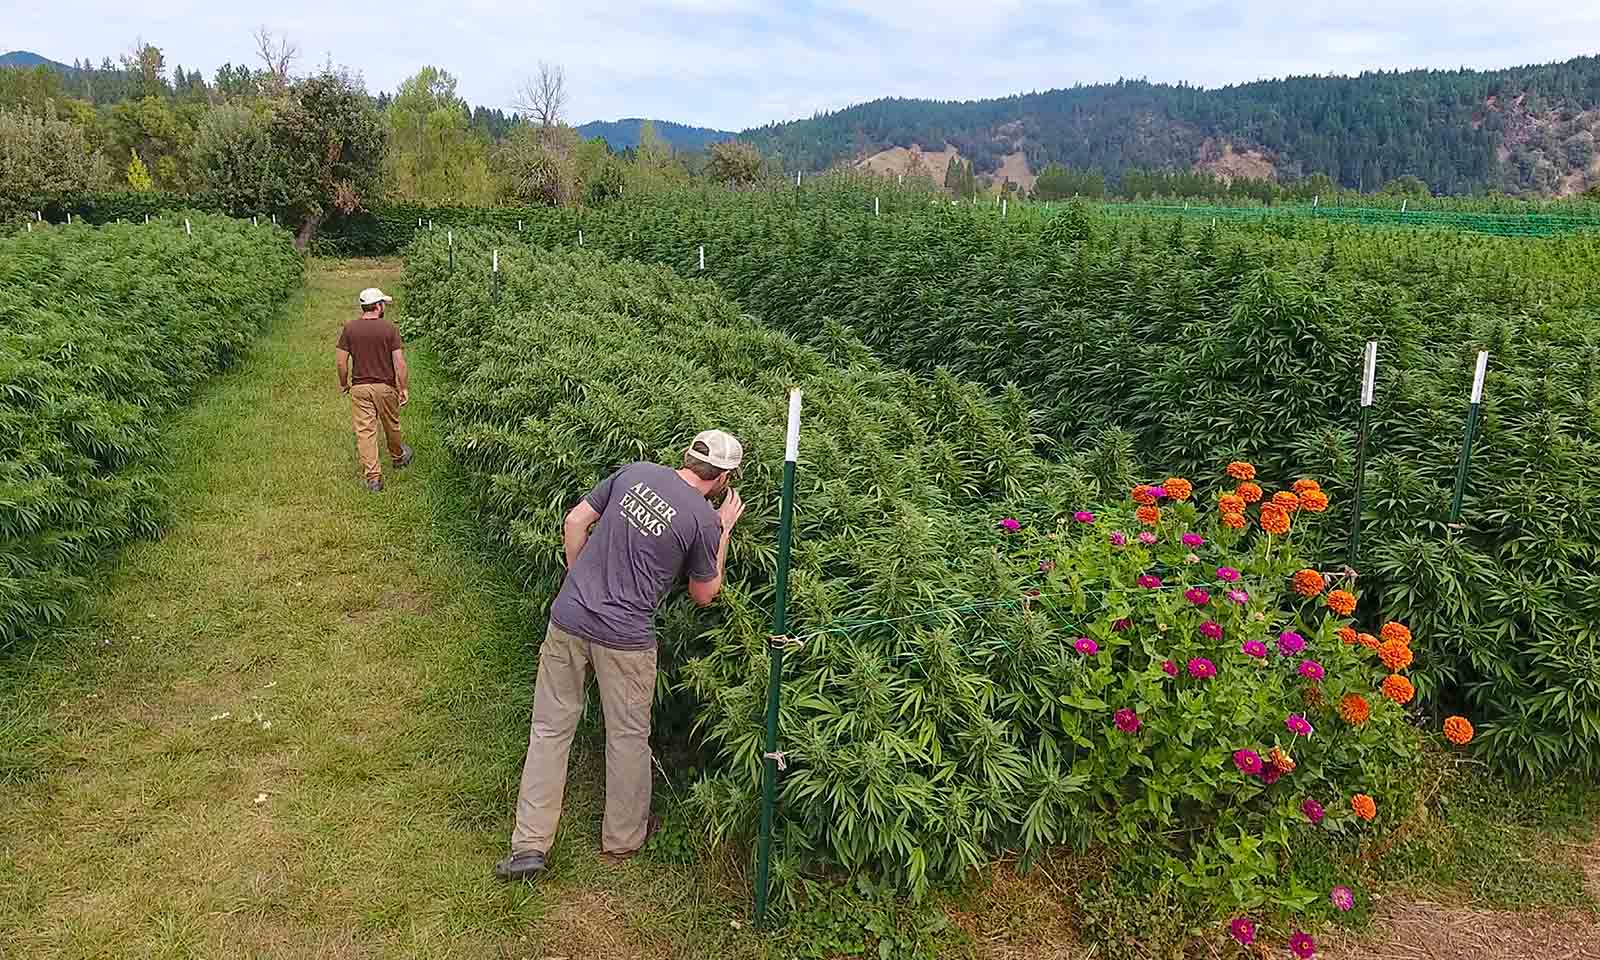 Alter Farms Oregon Marijuana Farming Cannabis Now